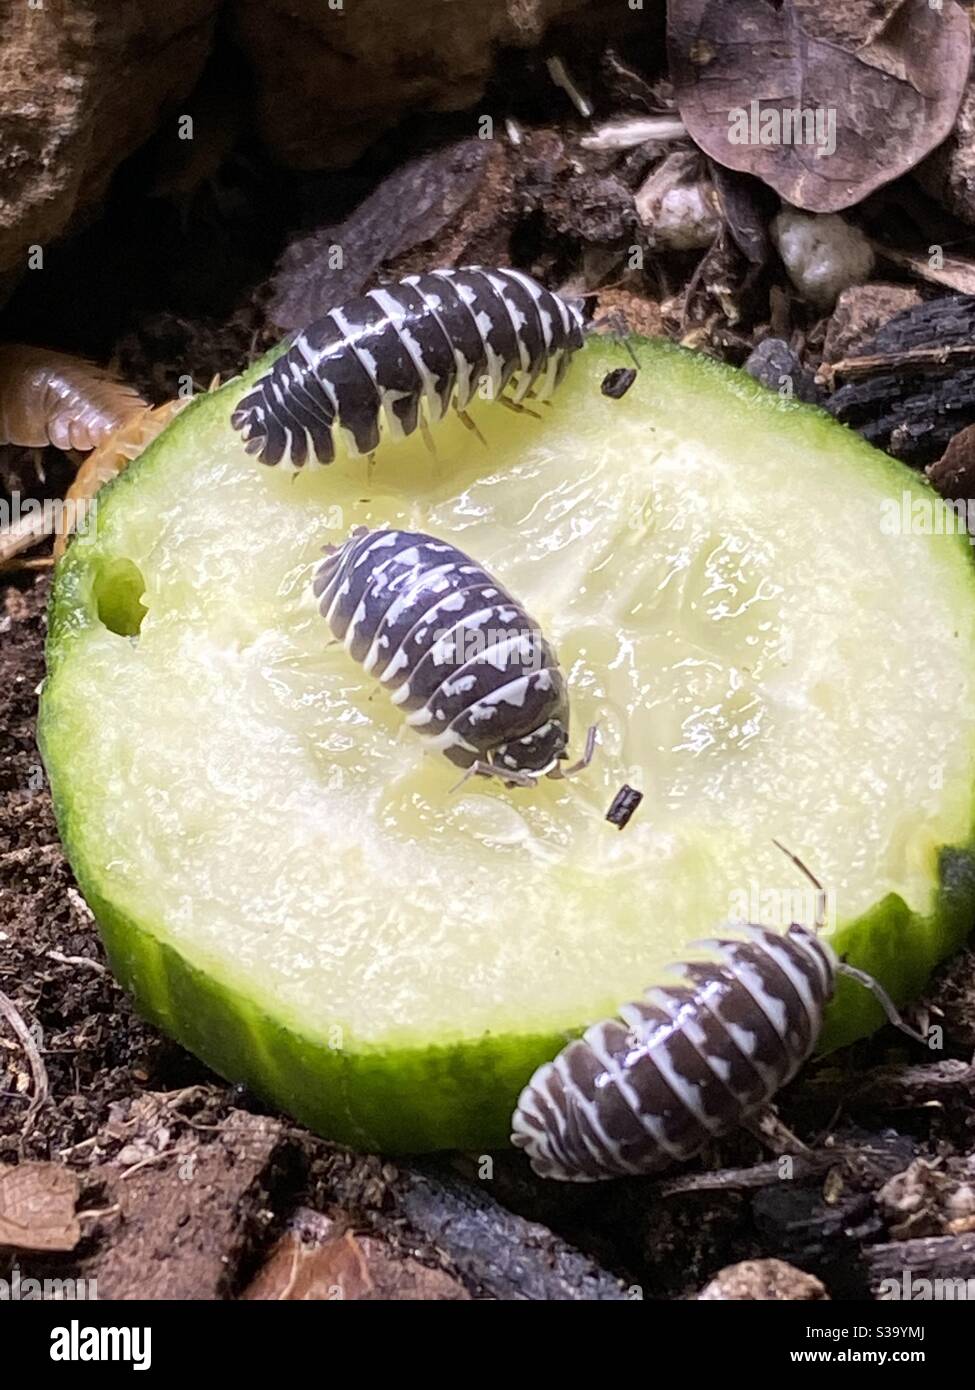 Zebra isopods on a slice of cucumber Stock Photo